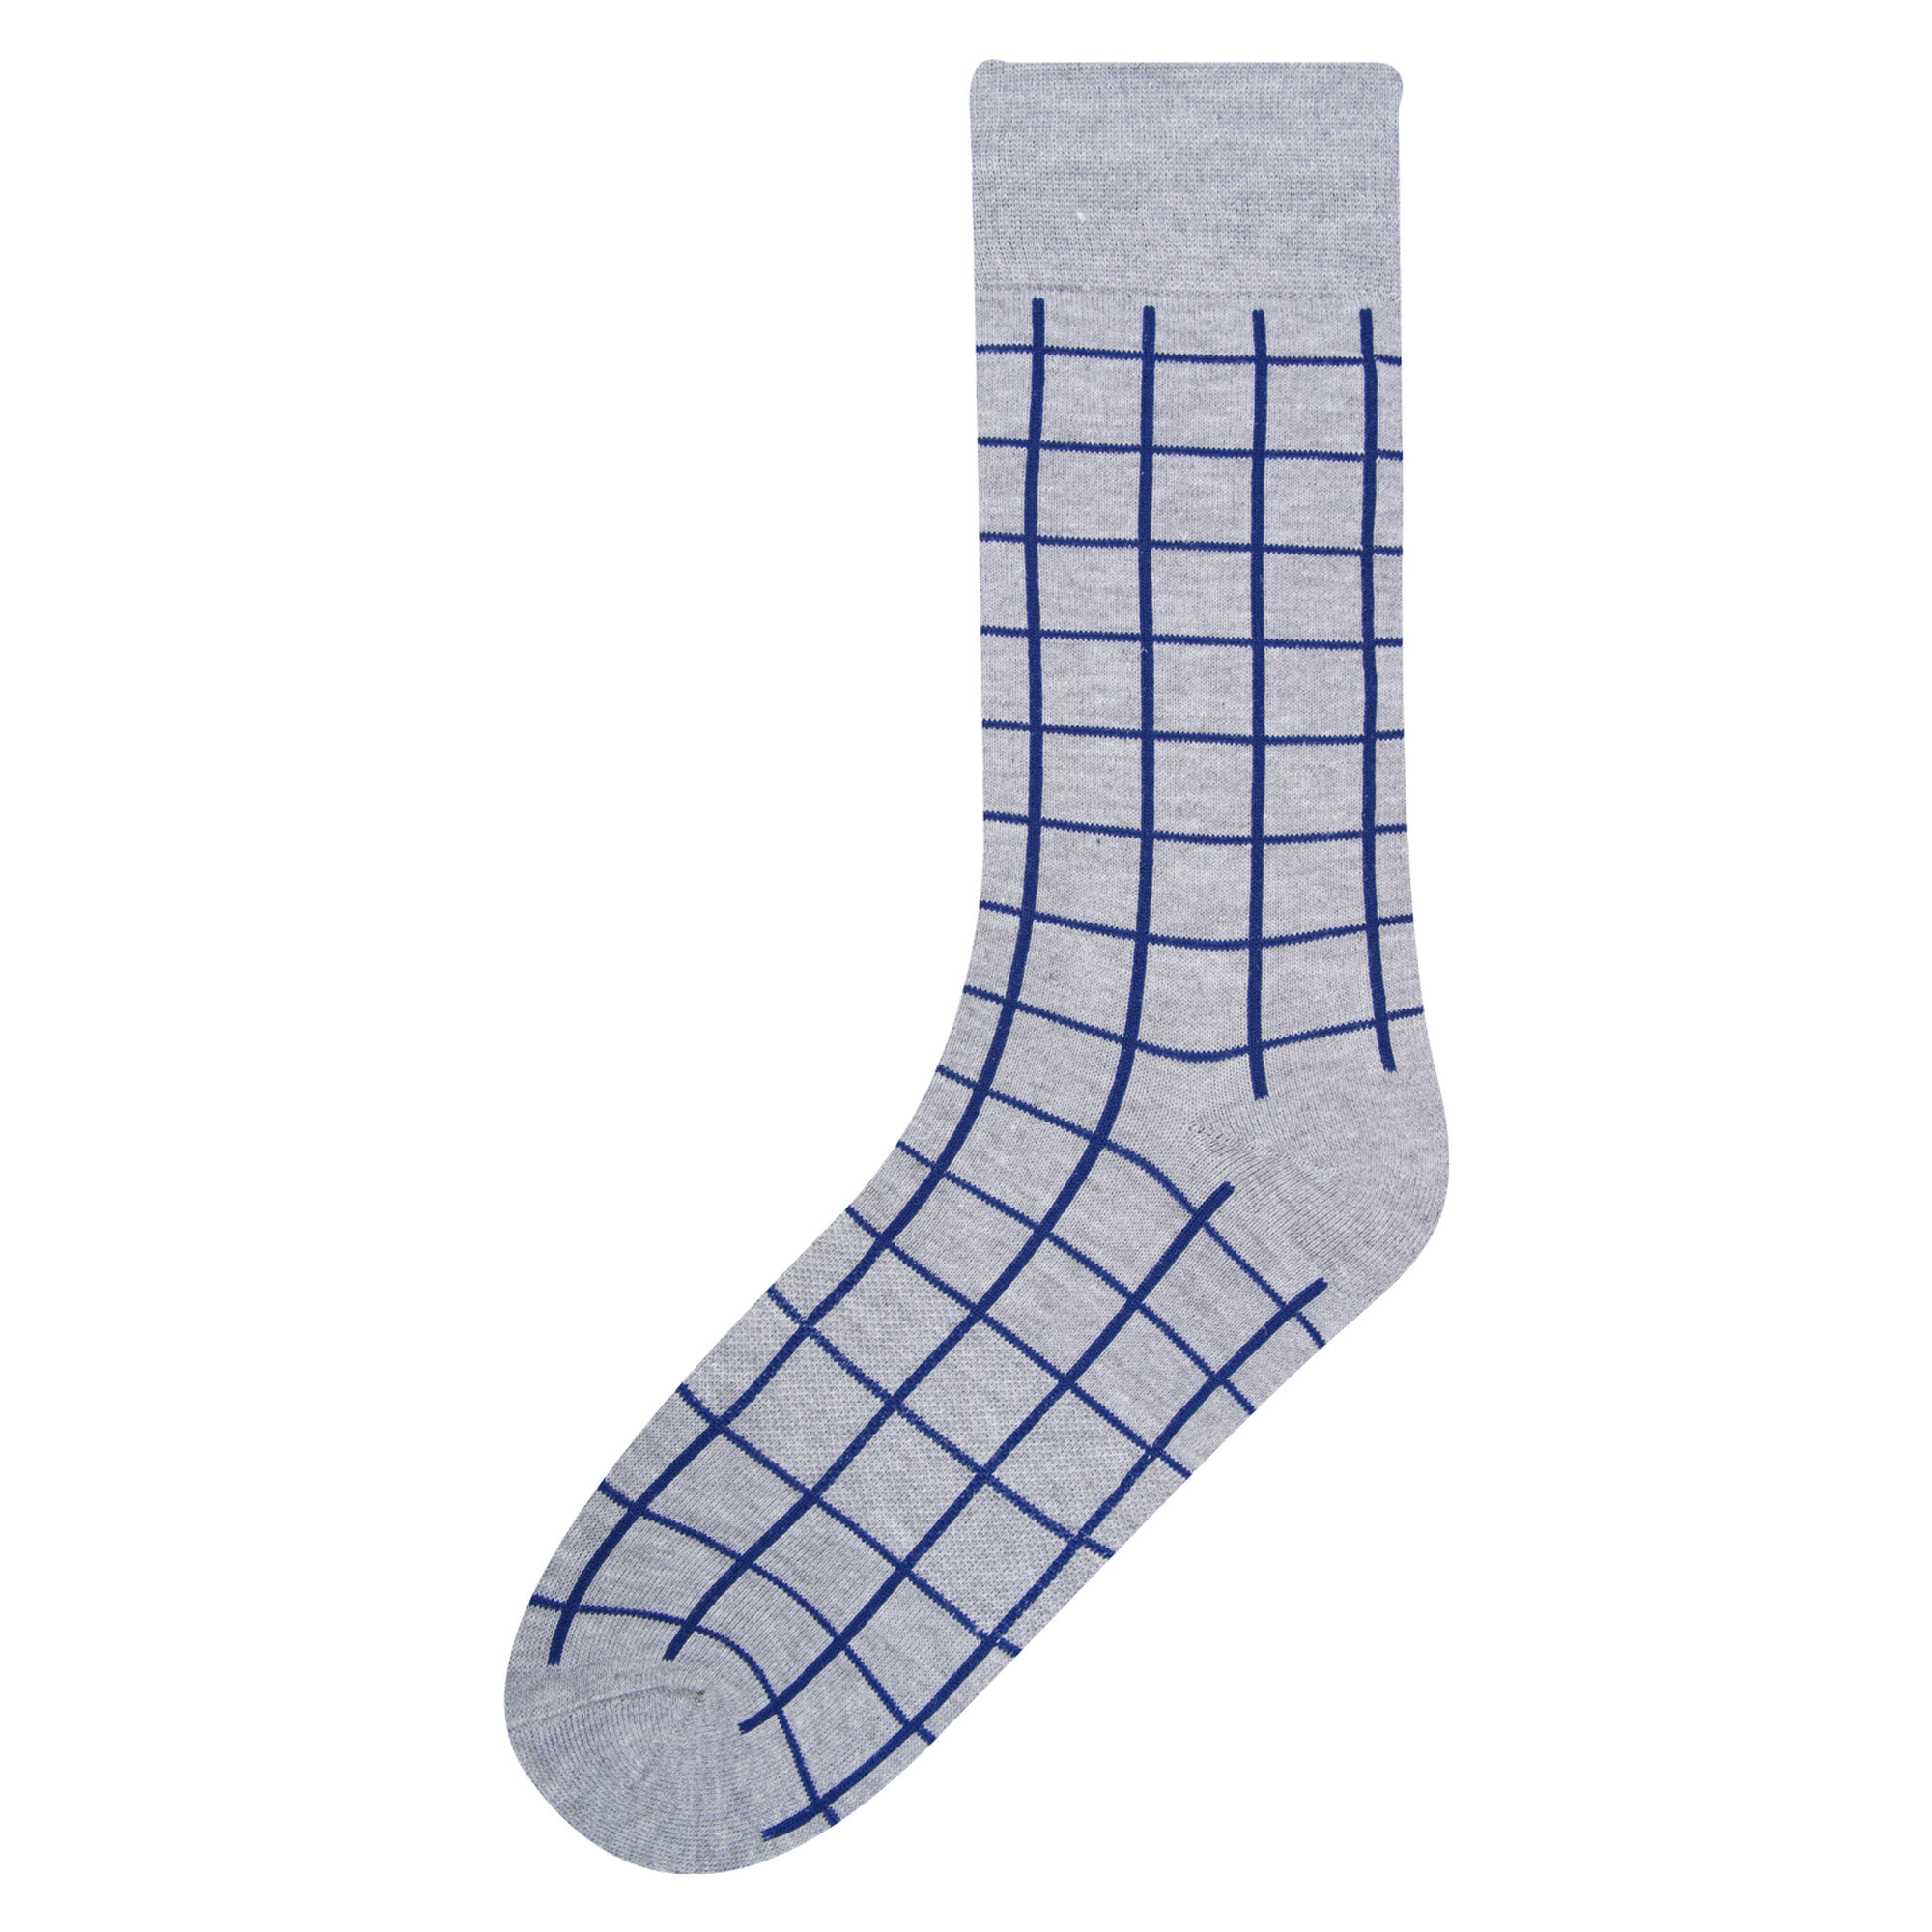 Haggar Grid Socks Graphite (5R19-2035 Clothing Underwear & Socks) photo